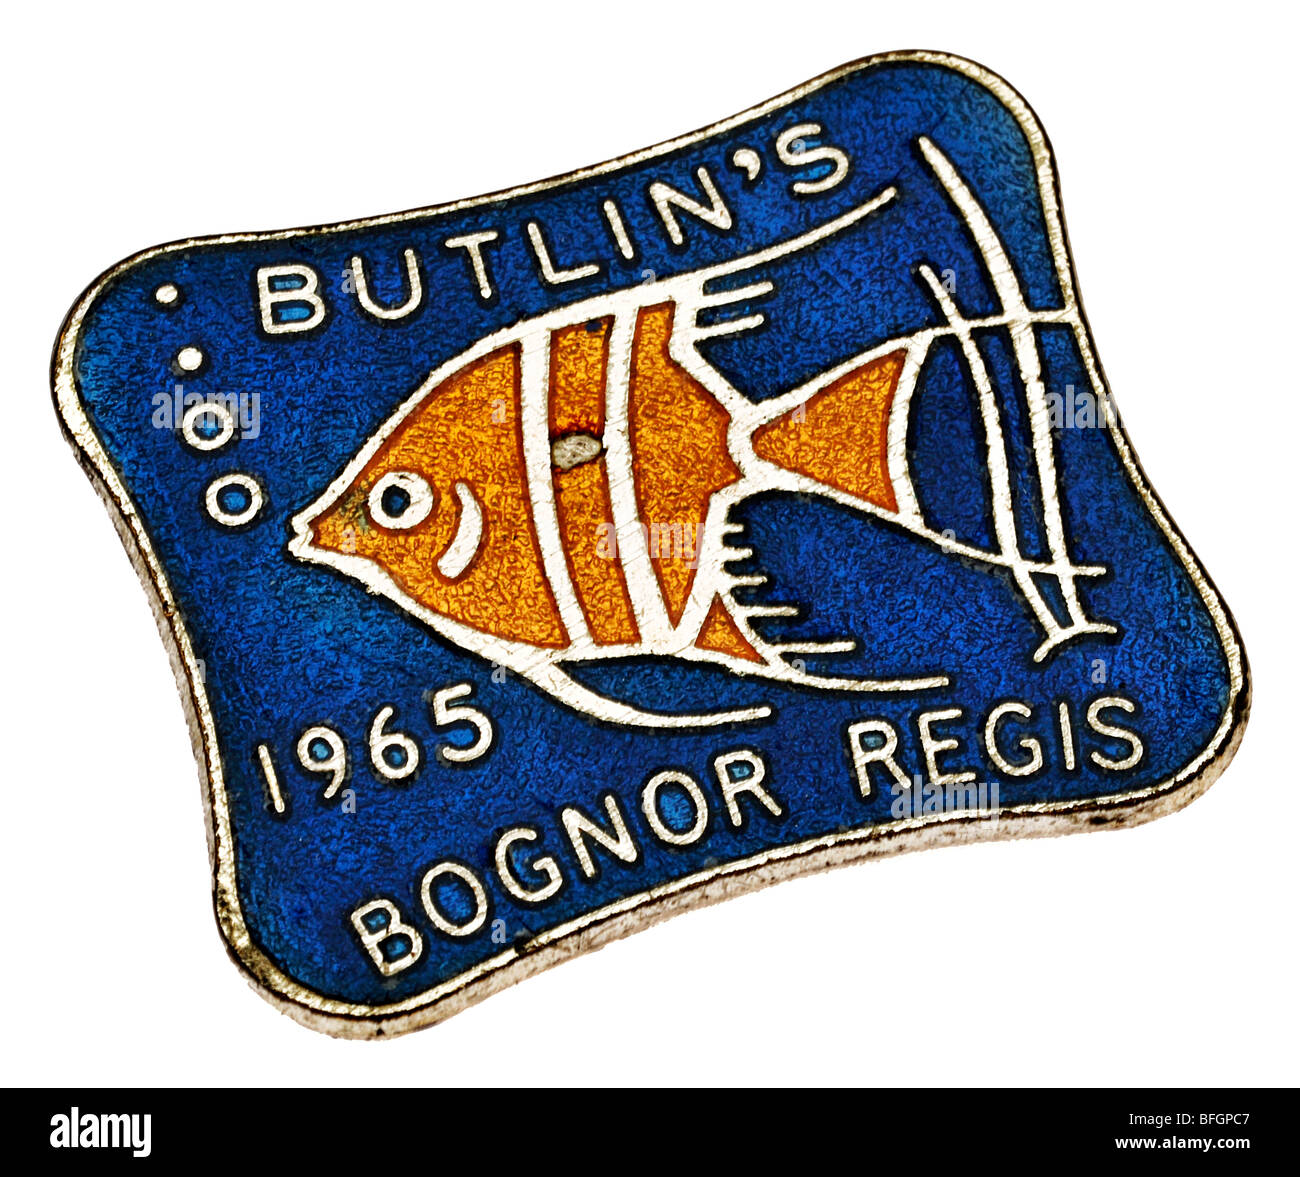 Al butlins holiday camp, Bognor Regis 1965 badge di smalto Foto Stock